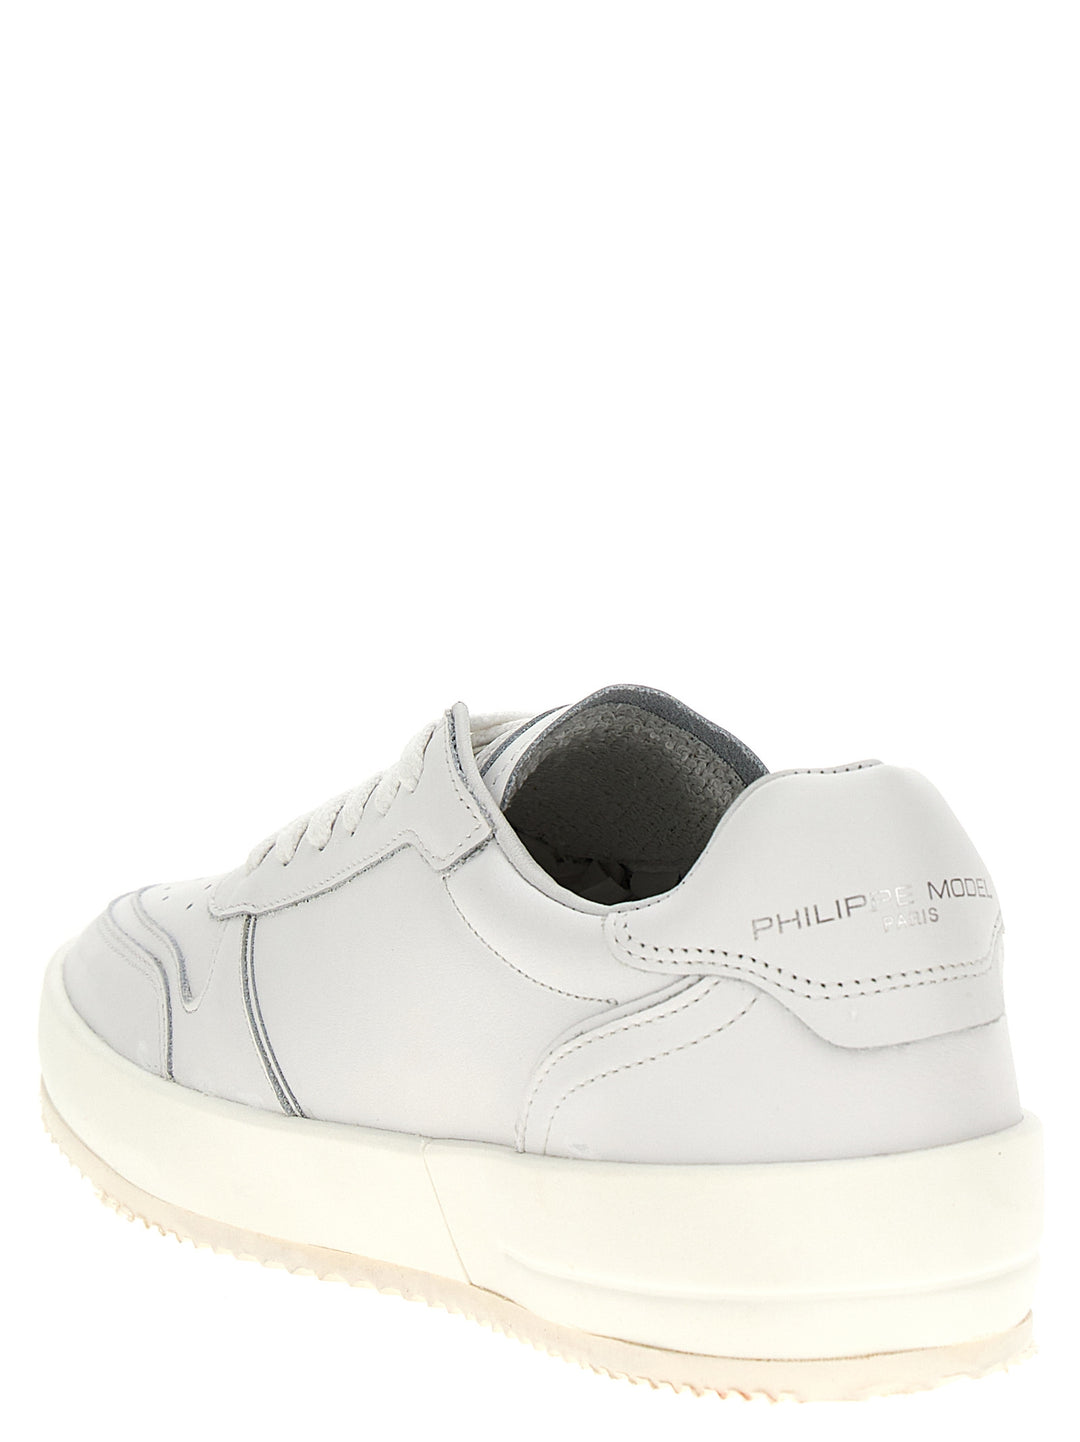 Nice Low Sneakers Bianco